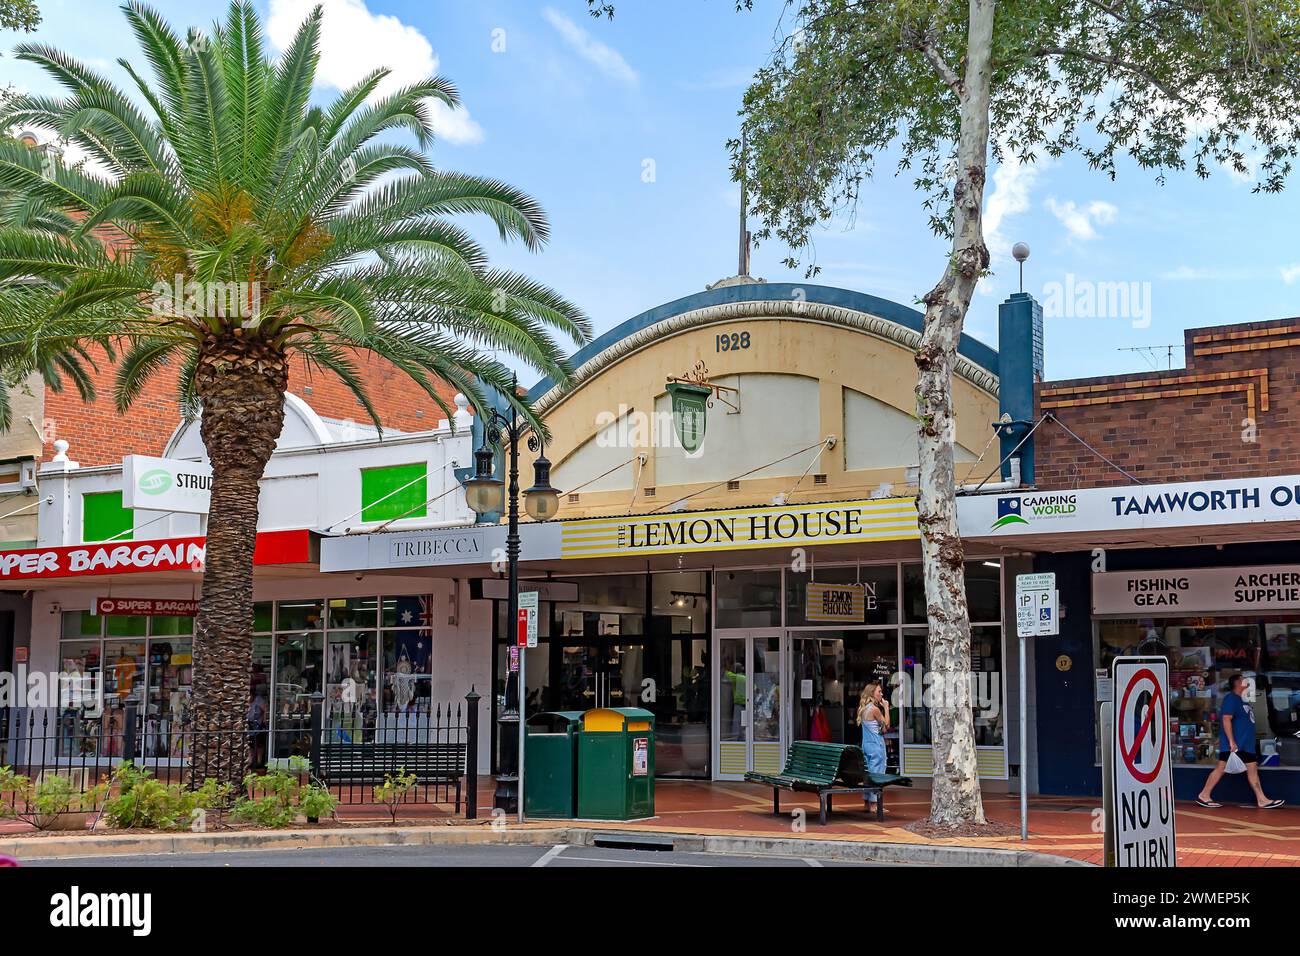 Lemon House Guft Shop and other Retail shops in  single storey buildings Peel Street Tamworth Australia. Stock Photo